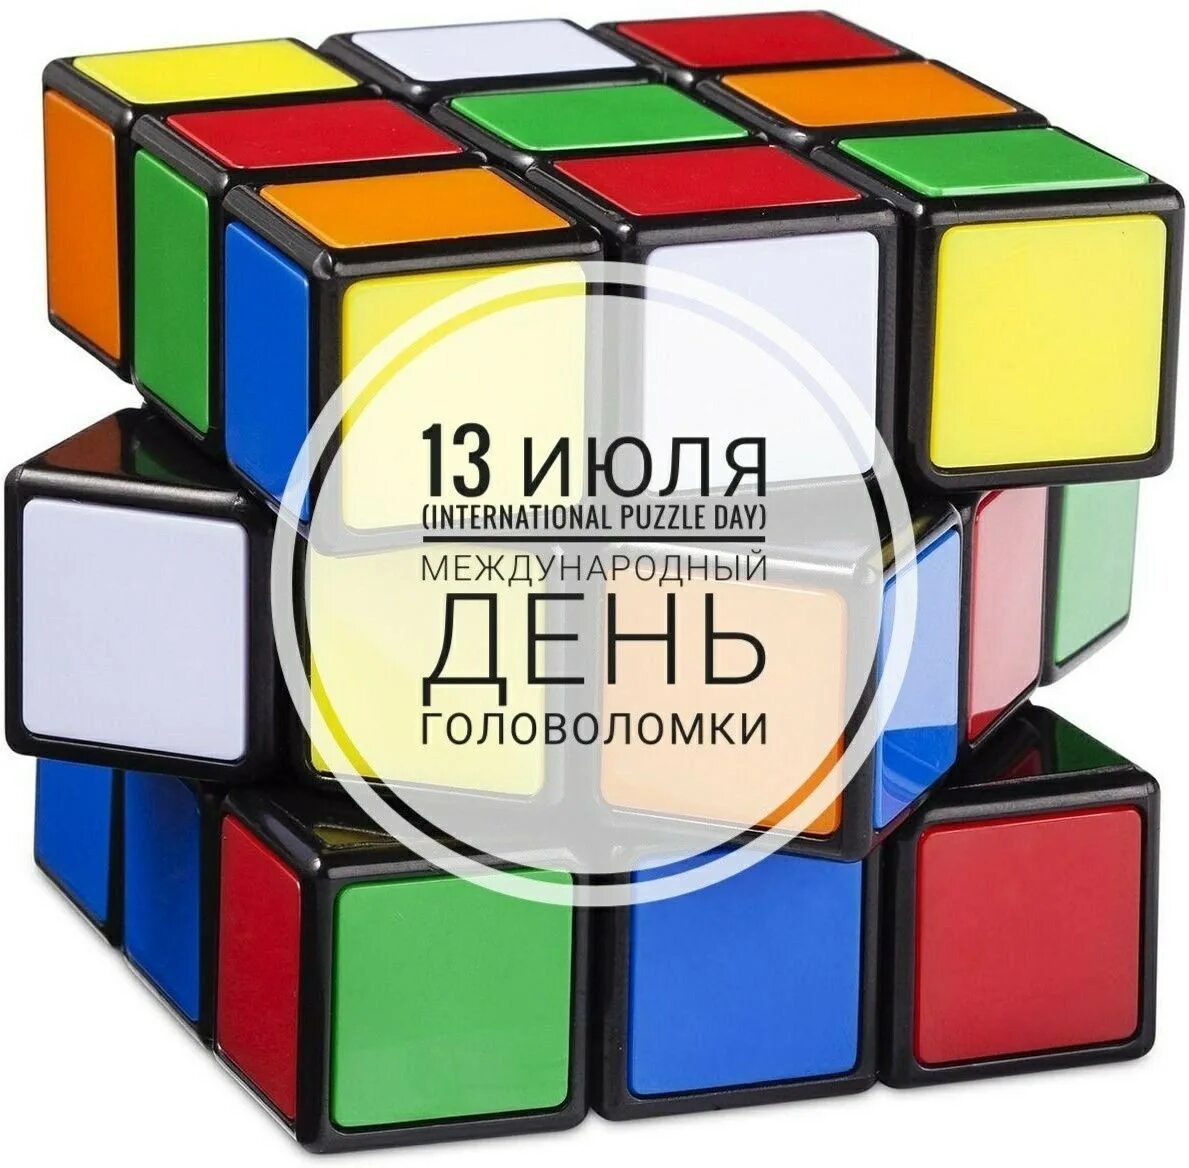 День головоломок. Международный день головоломки. Международный день головоломки 13 июля. Международный день головоломки (International Puzzle Day). Кубик Рубика.